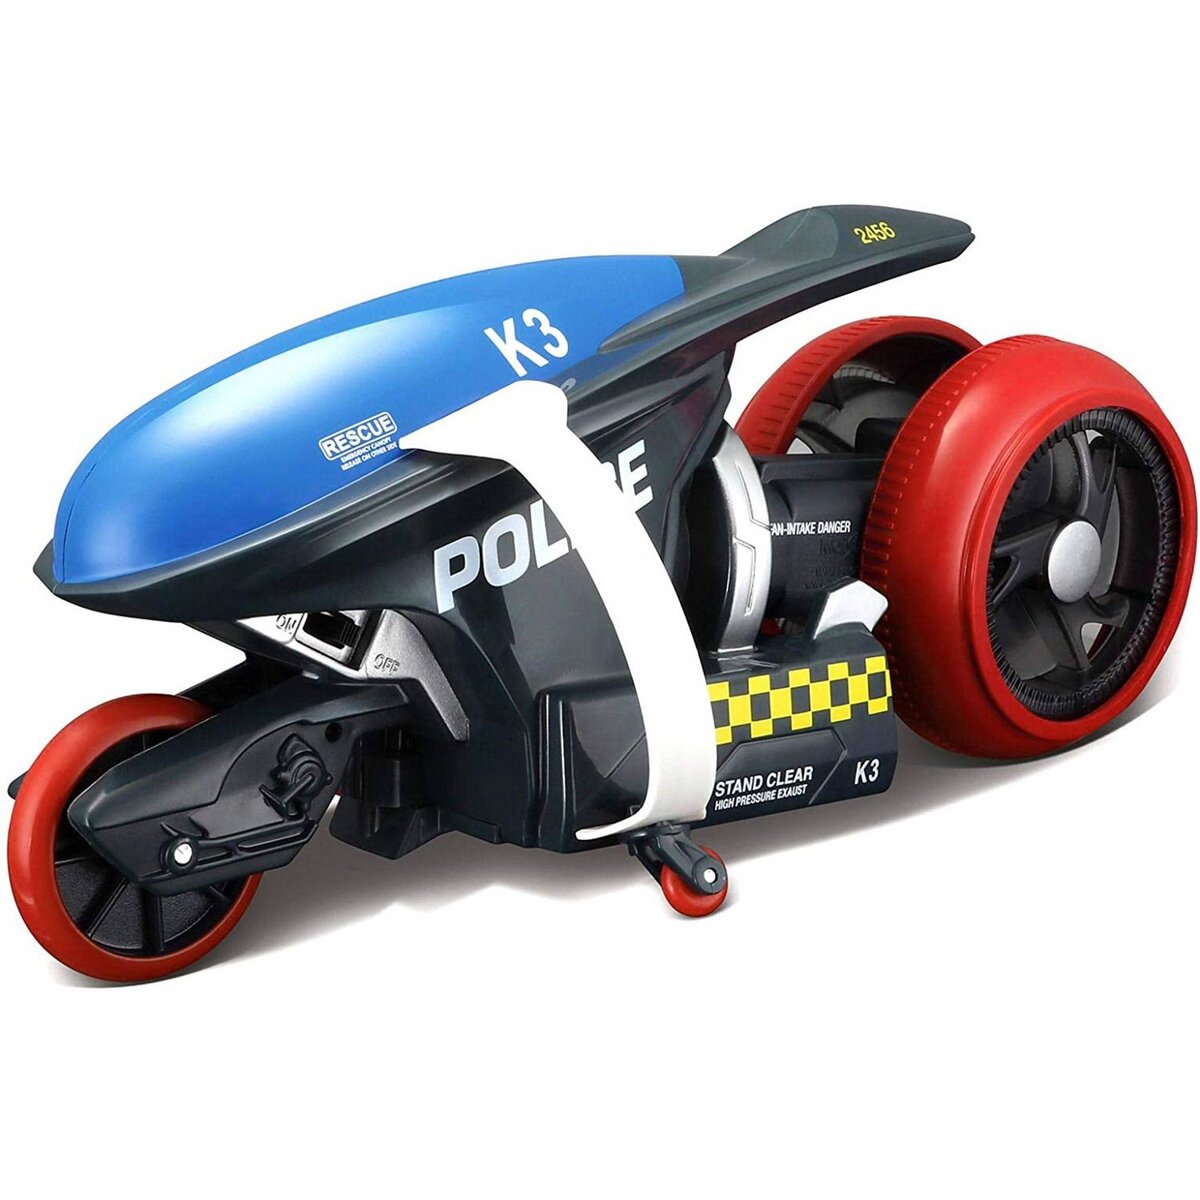 BURAGO Moto police cyklone 360° radiocommandée noire et bleue K3